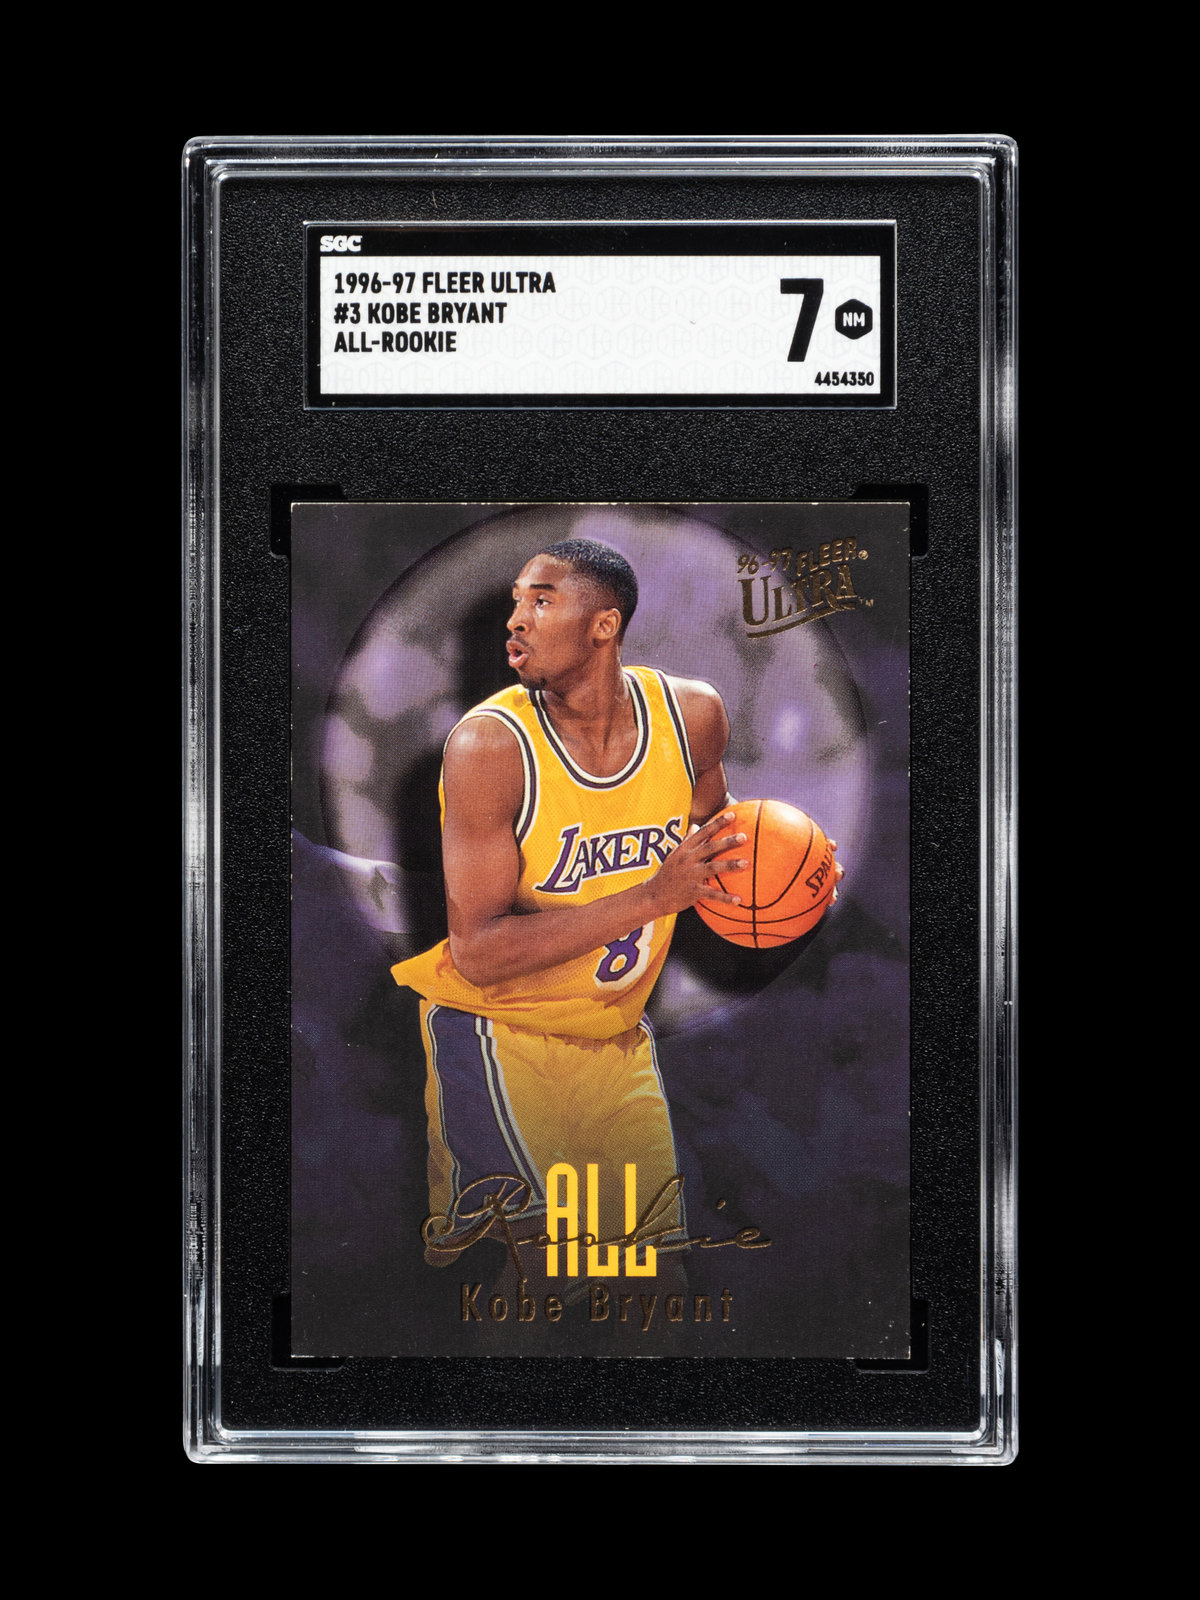 A Group of 1996-97 Fleer Ultra Kobe Bryant Rookie Basketball Cards,